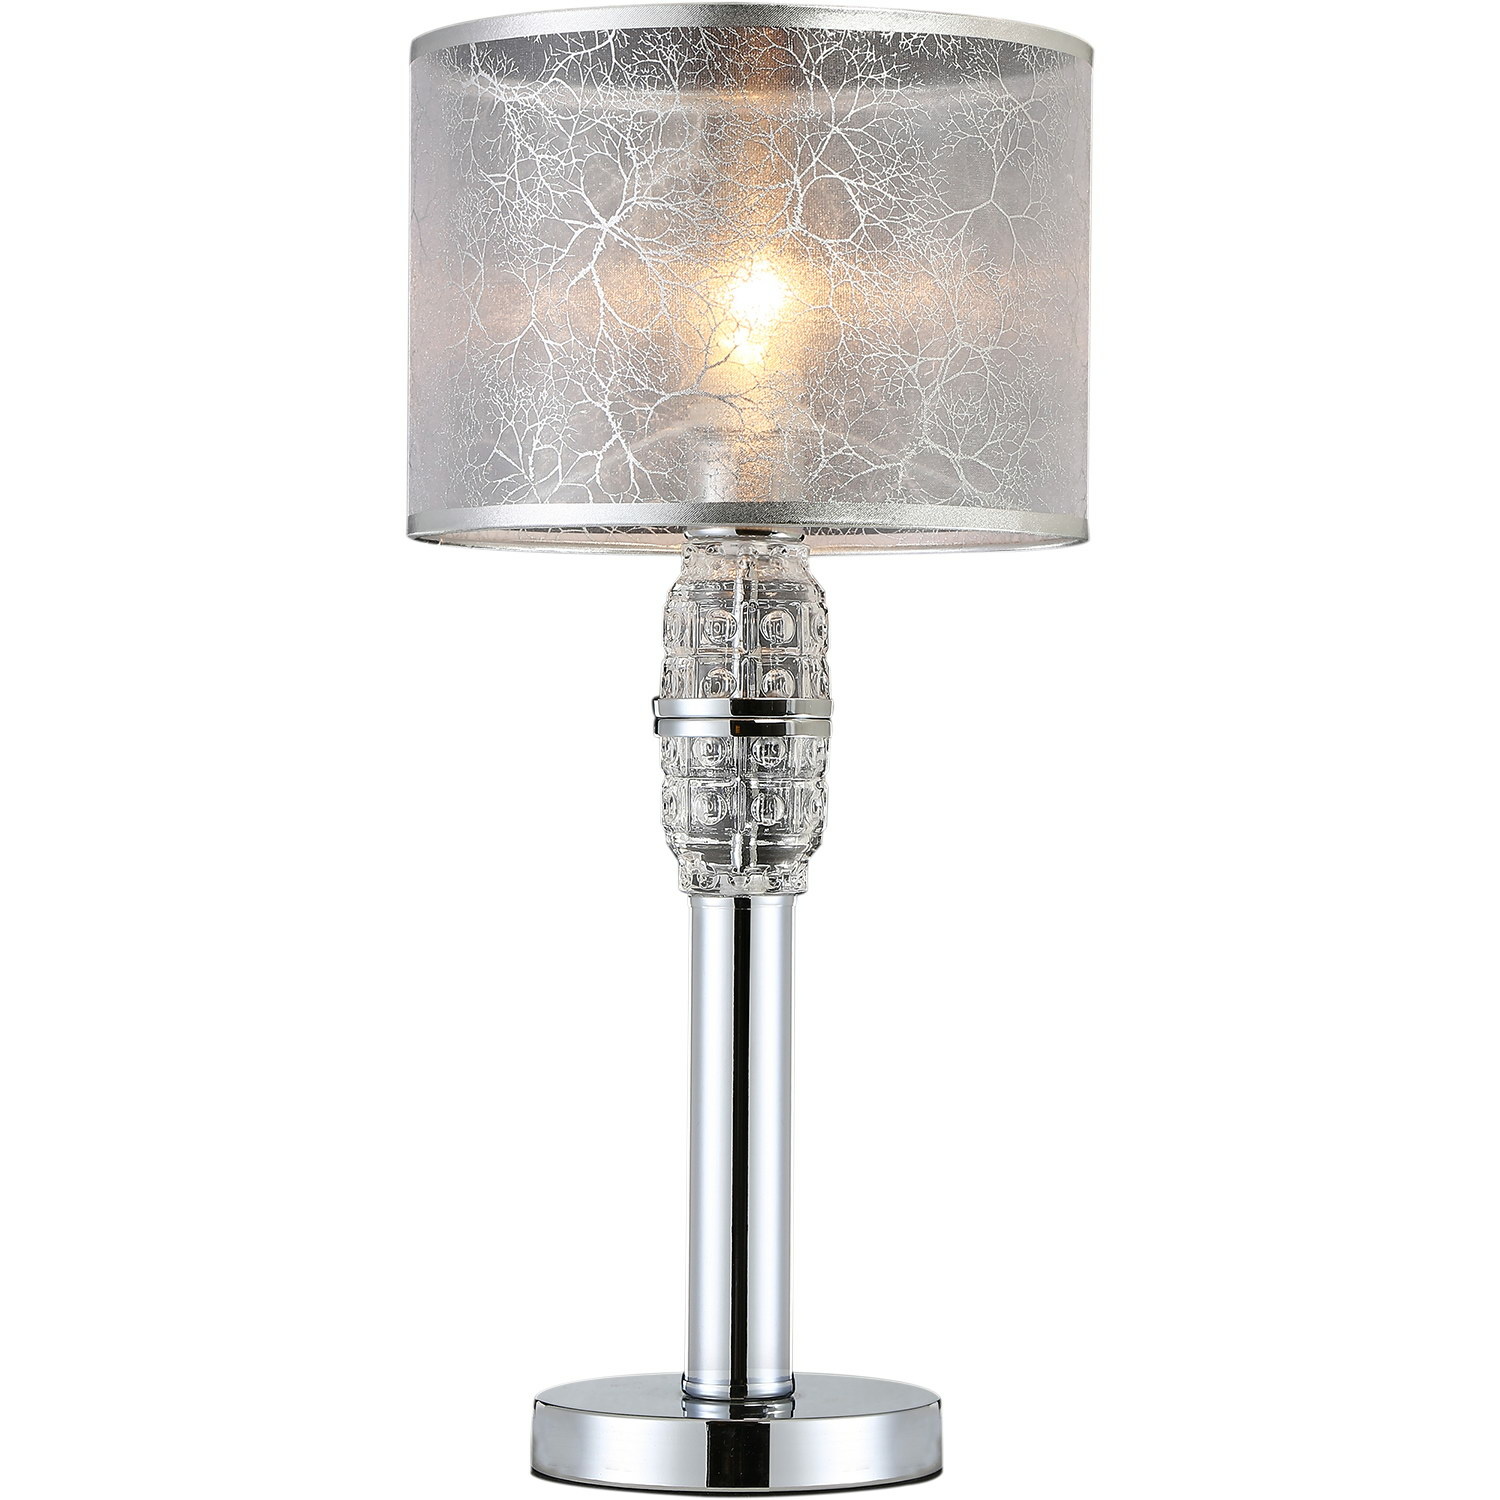 Настольная лампа Illumico IL6216-1T-27 CR